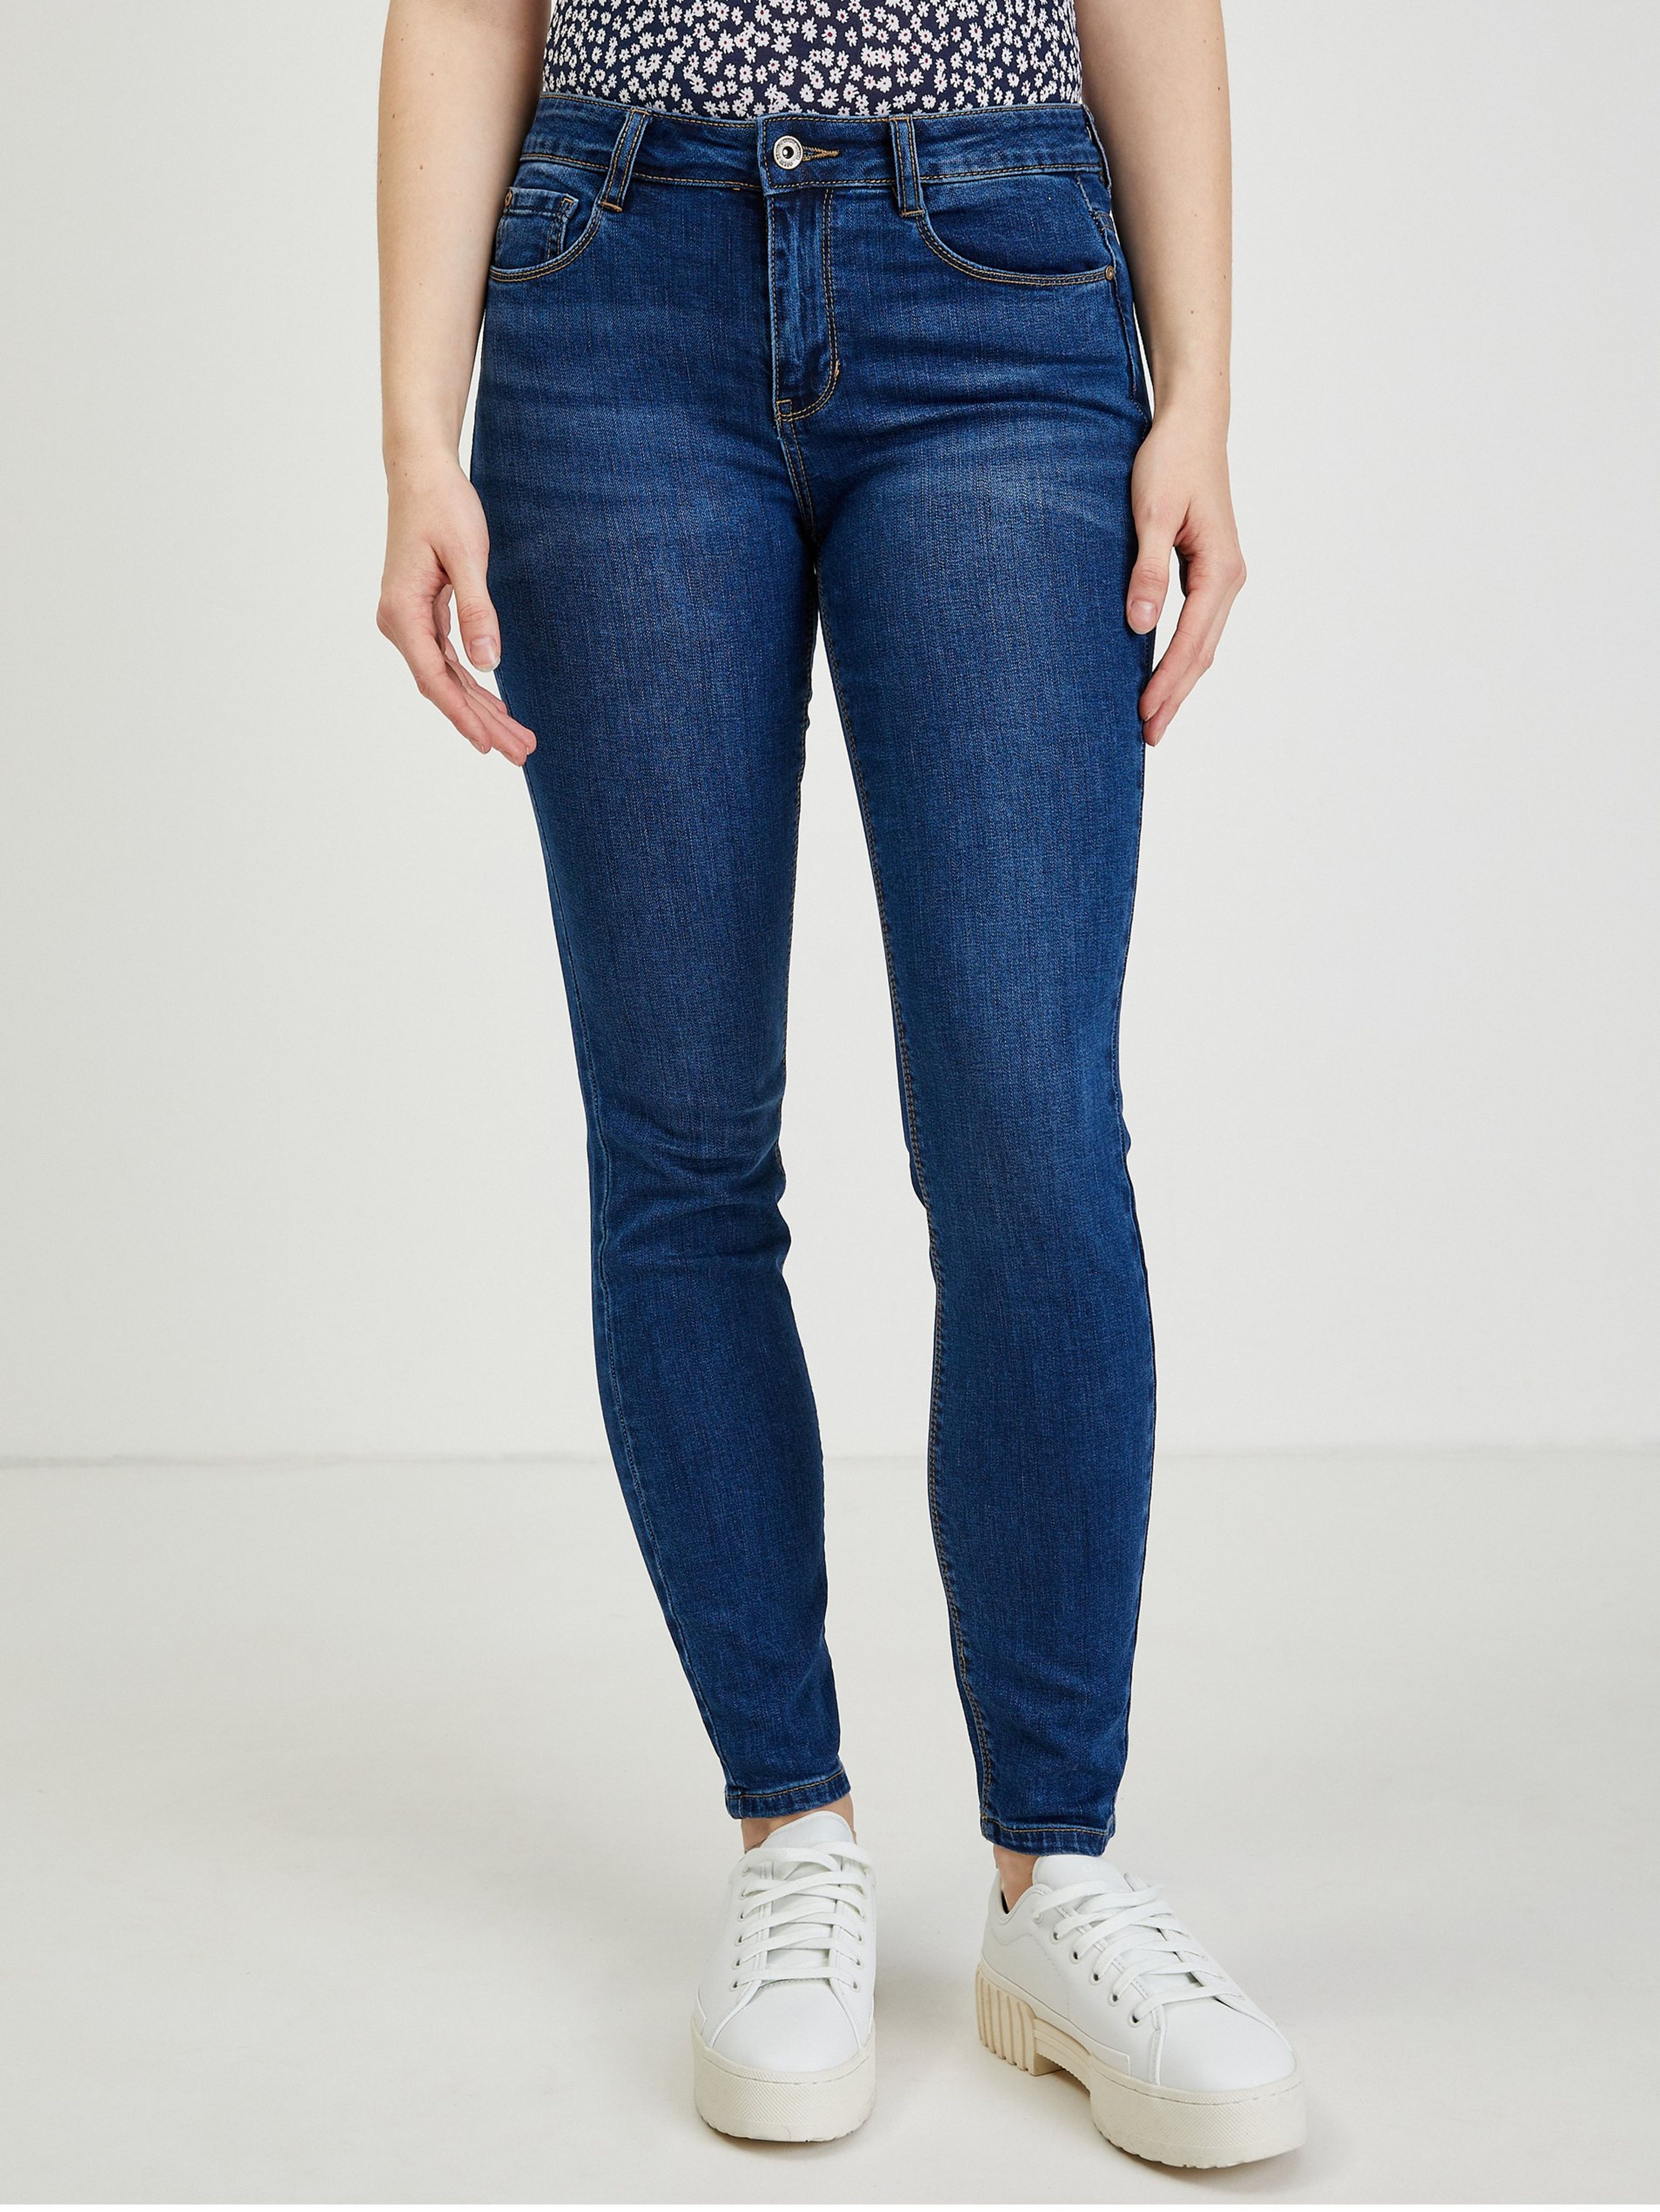 Granatowe damskie jeansy skinny fit ORSAY